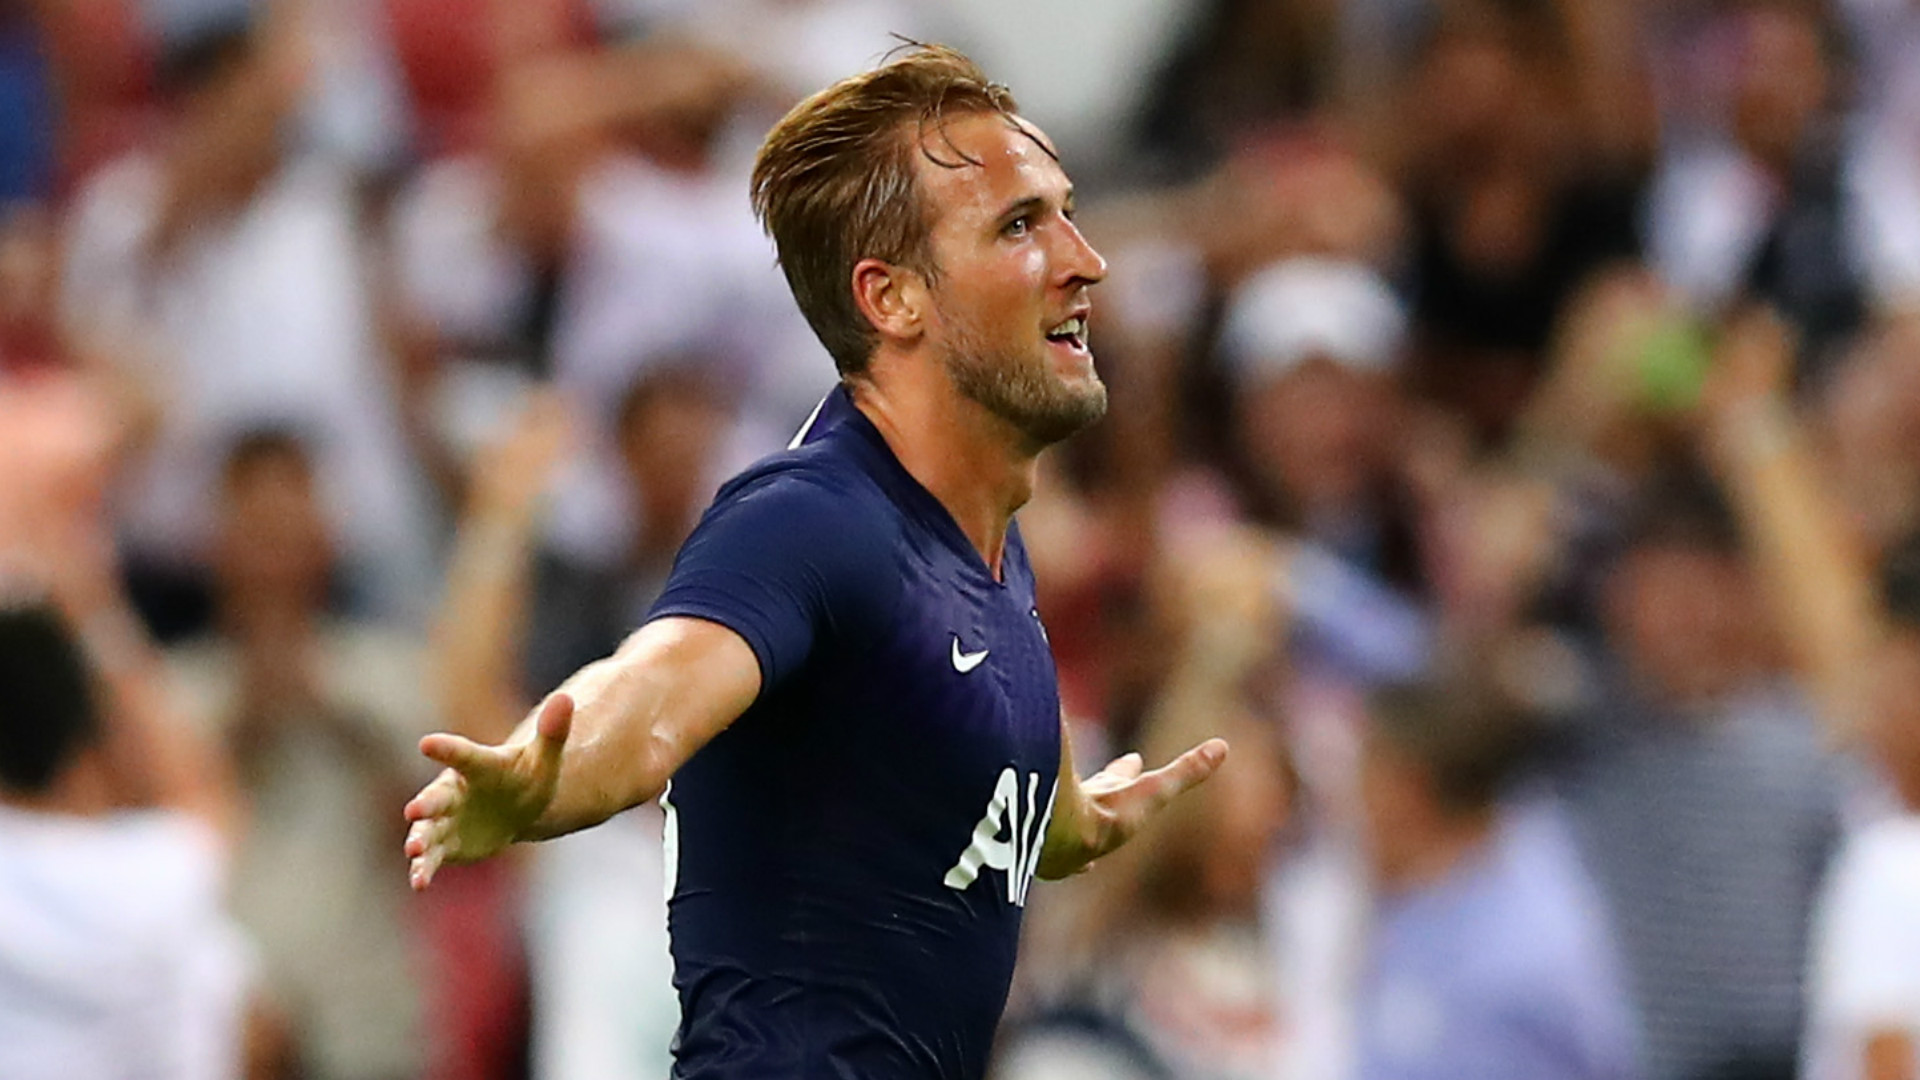 VIDEO: Kane scores stunning winner from centre circle against Juventus